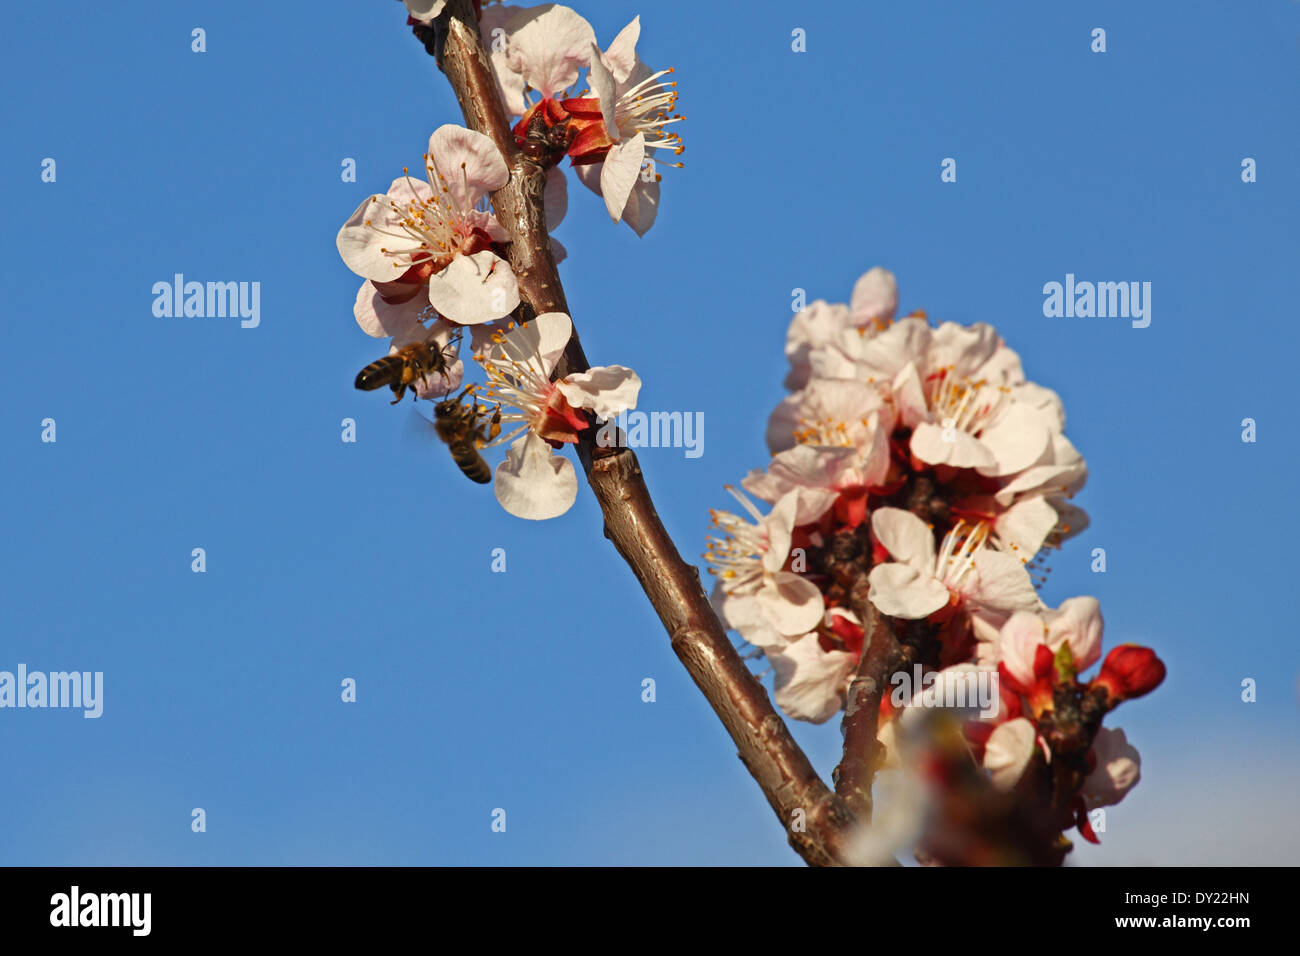 European honey bee (Apis mellifera) collecting nectar on Apricot flowers (Prunus armeniaca), variety Bhart. Stock Photo